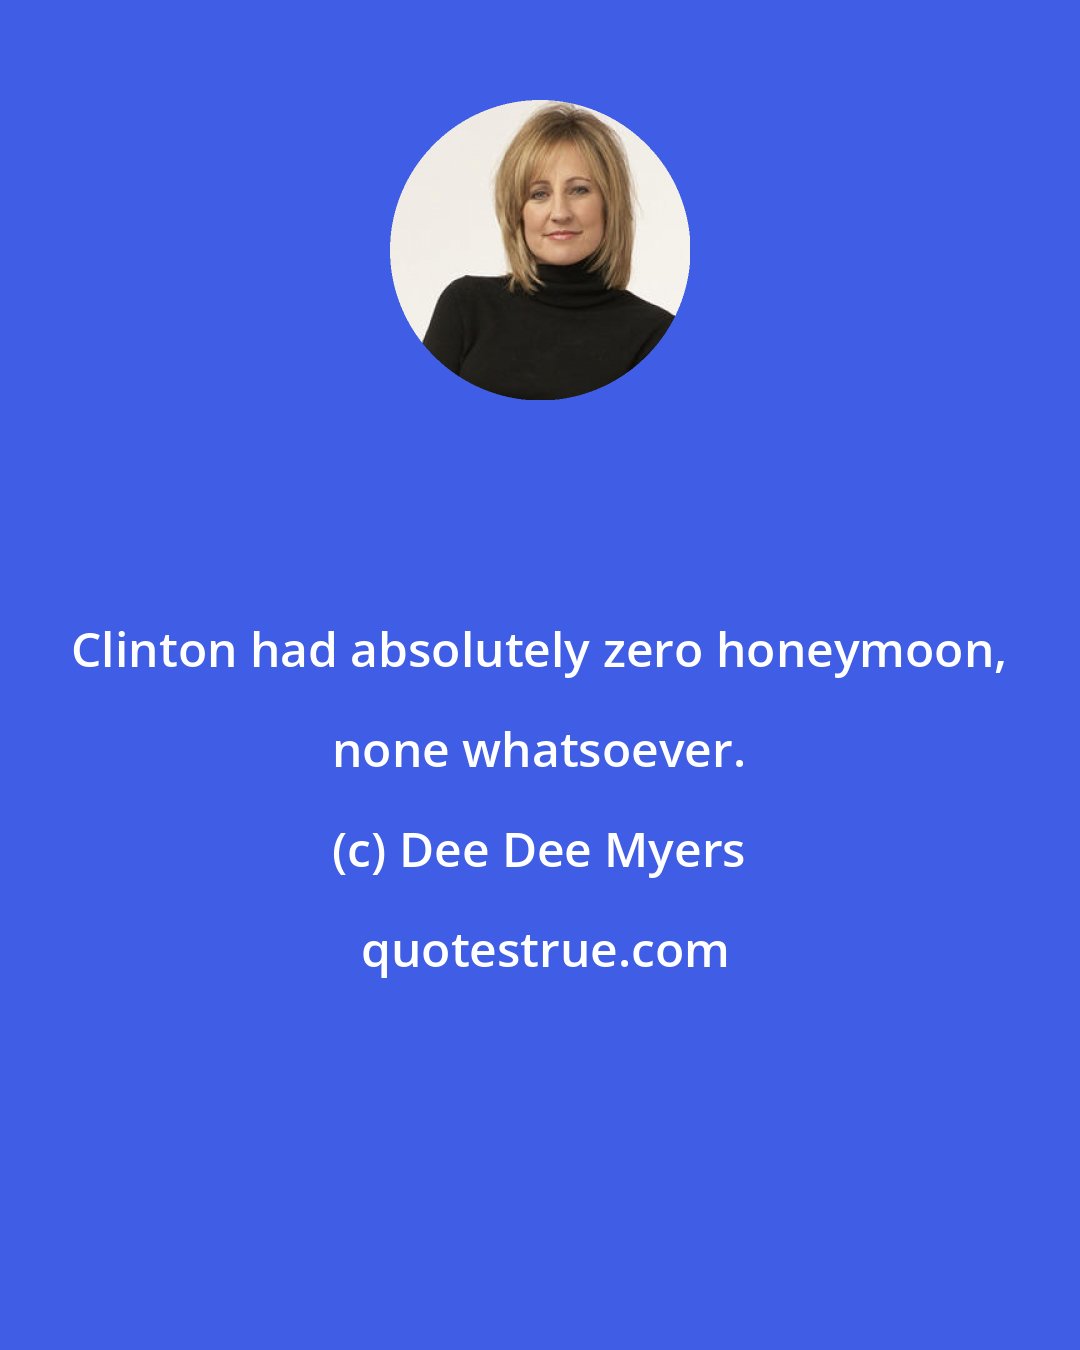 Dee Dee Myers: Clinton had absolutely zero honeymoon, none whatsoever.